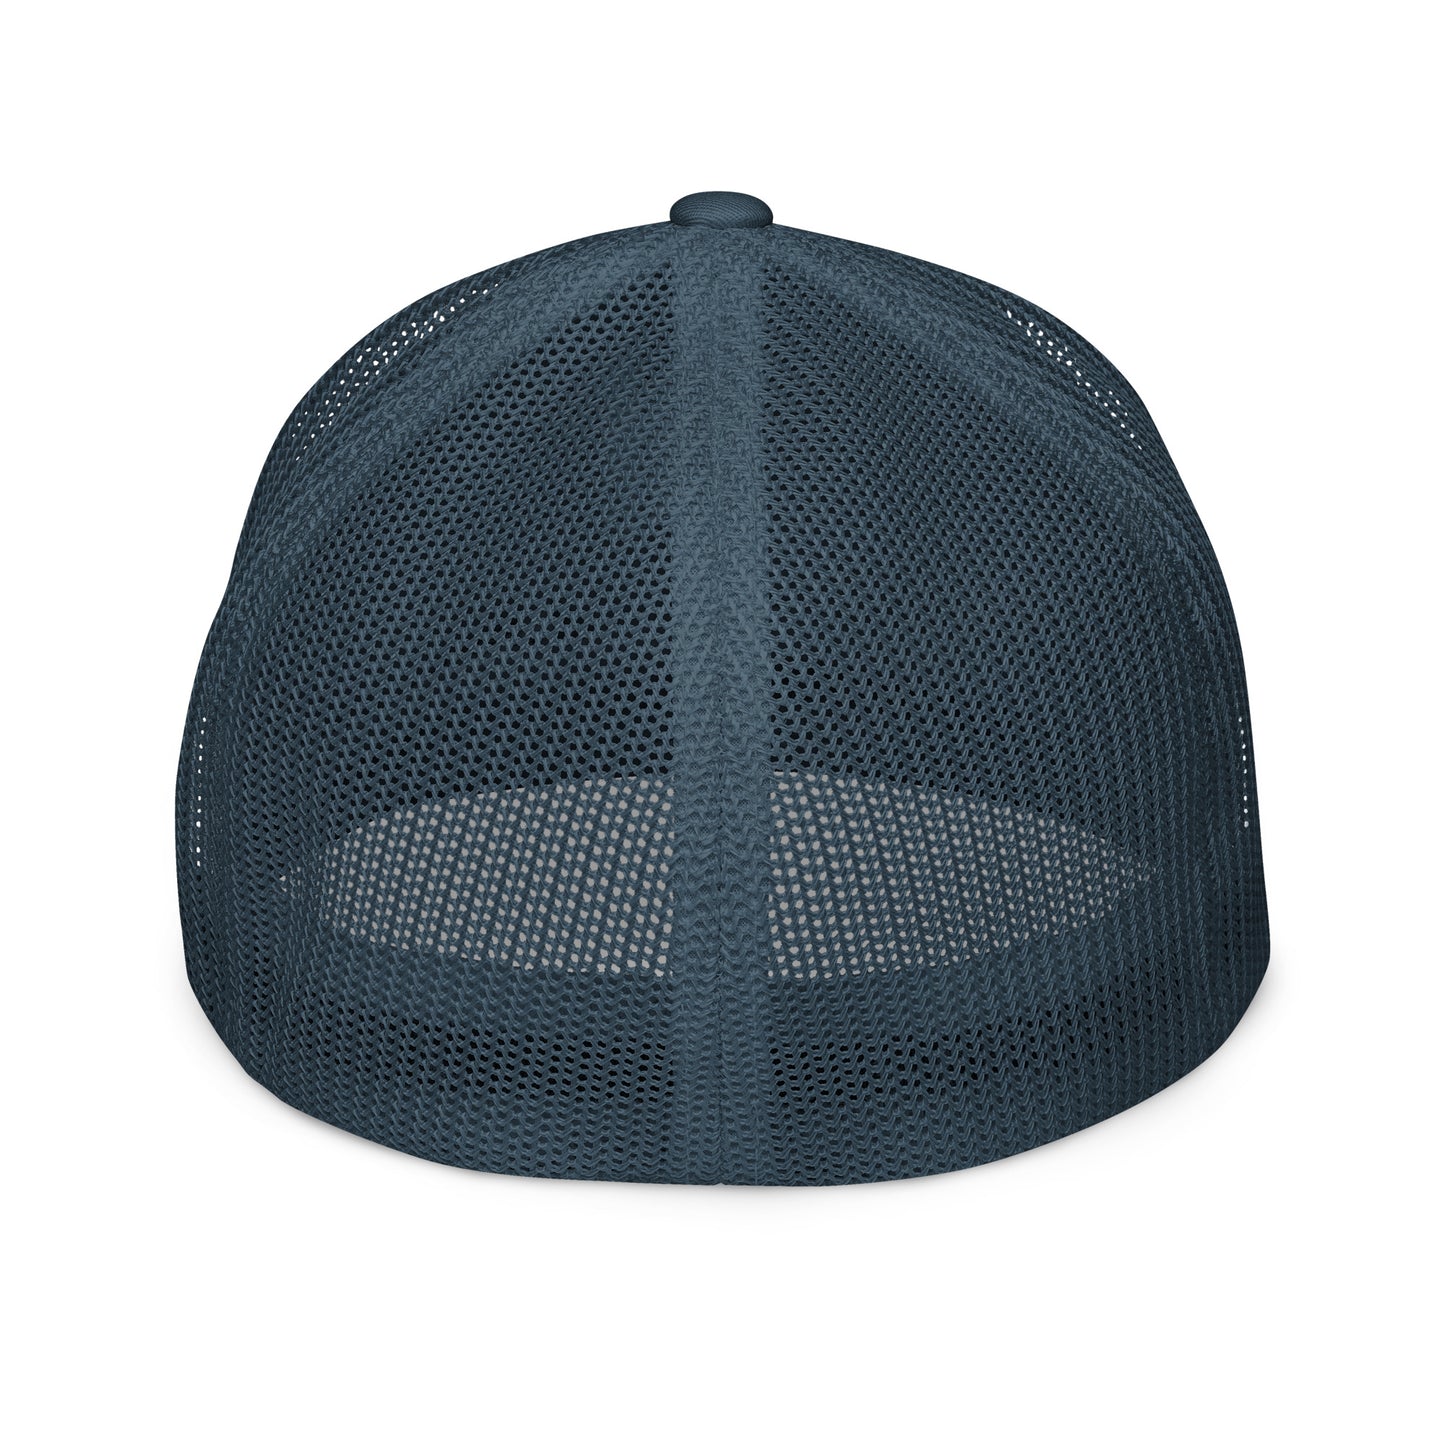 Hi 👋 Emoji Mesh Flexfit Hat in navy by Hi Happy interactions